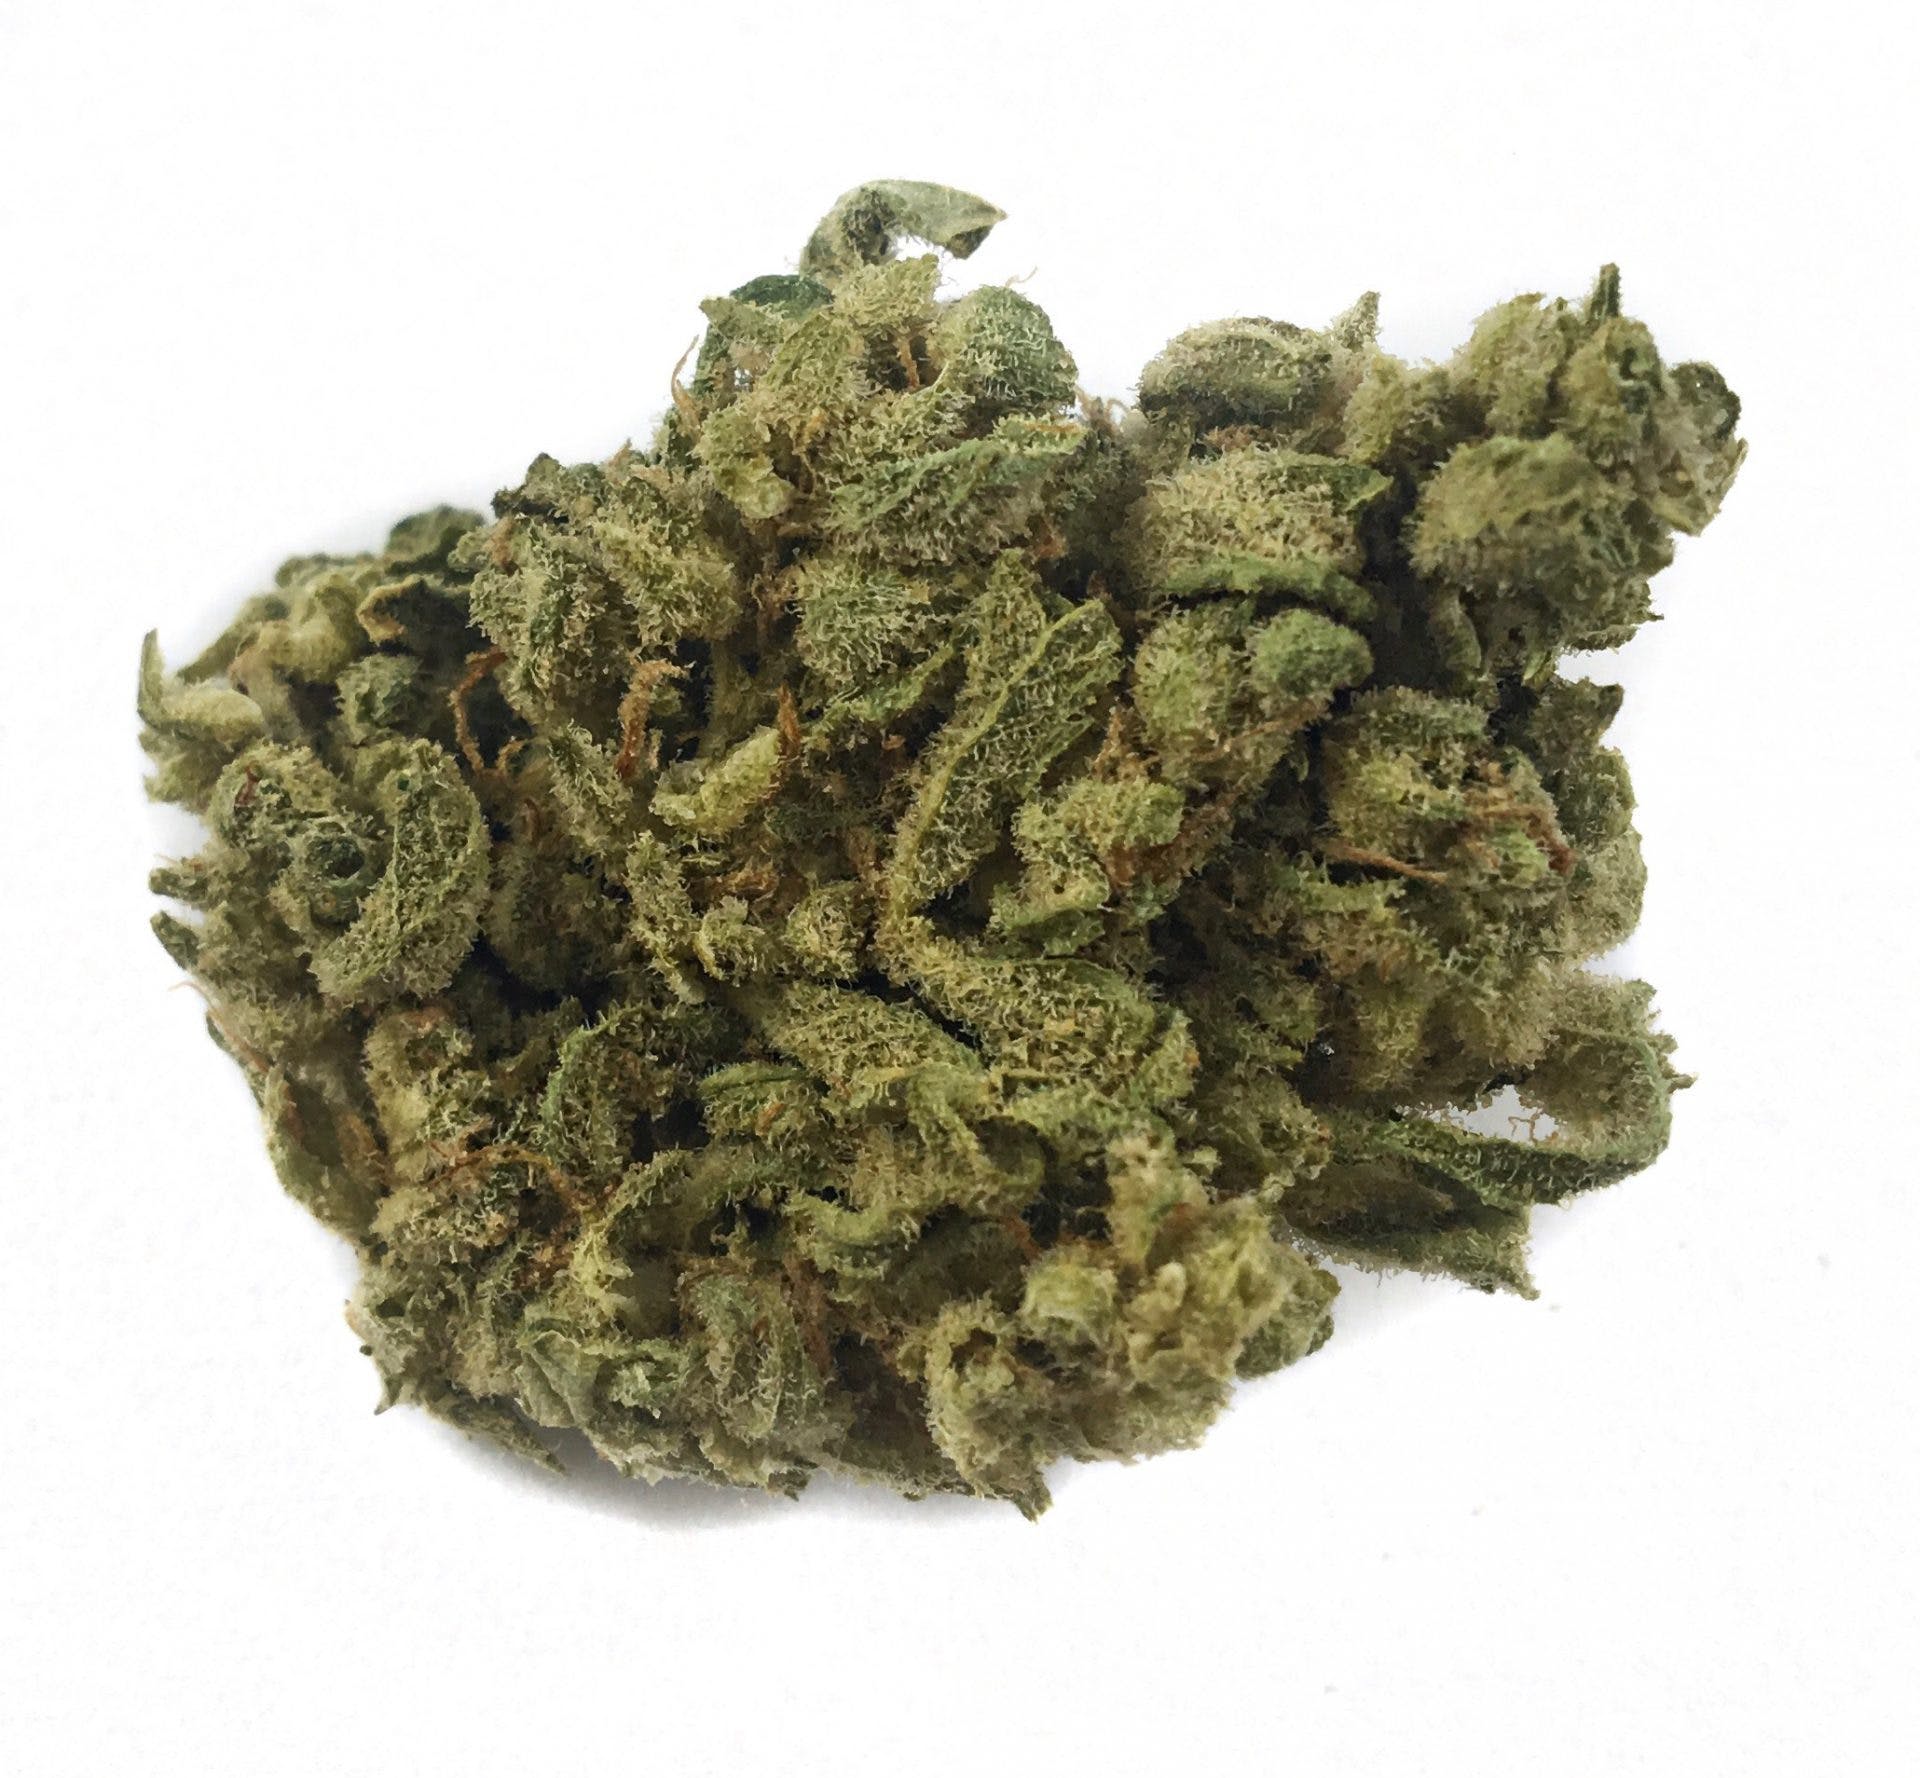 marijuana-dispensaries-the-20-spot-in-van-nuys-vip-blue-dream-2oz270-qp530